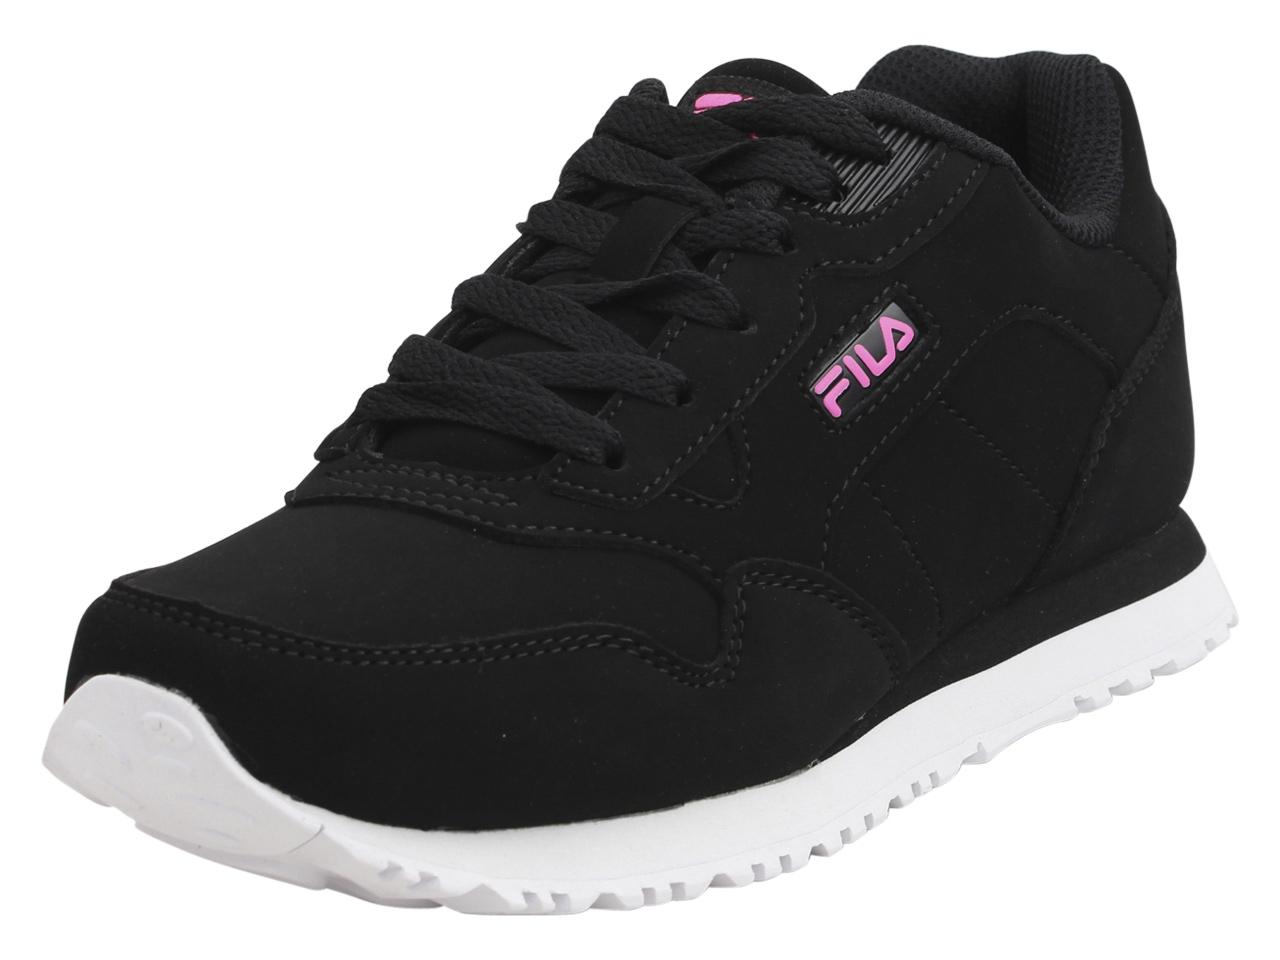 Fila Women's Cress Sneakers Shoes - Black/Knock Out Pink/White - 6.5 B(M) US